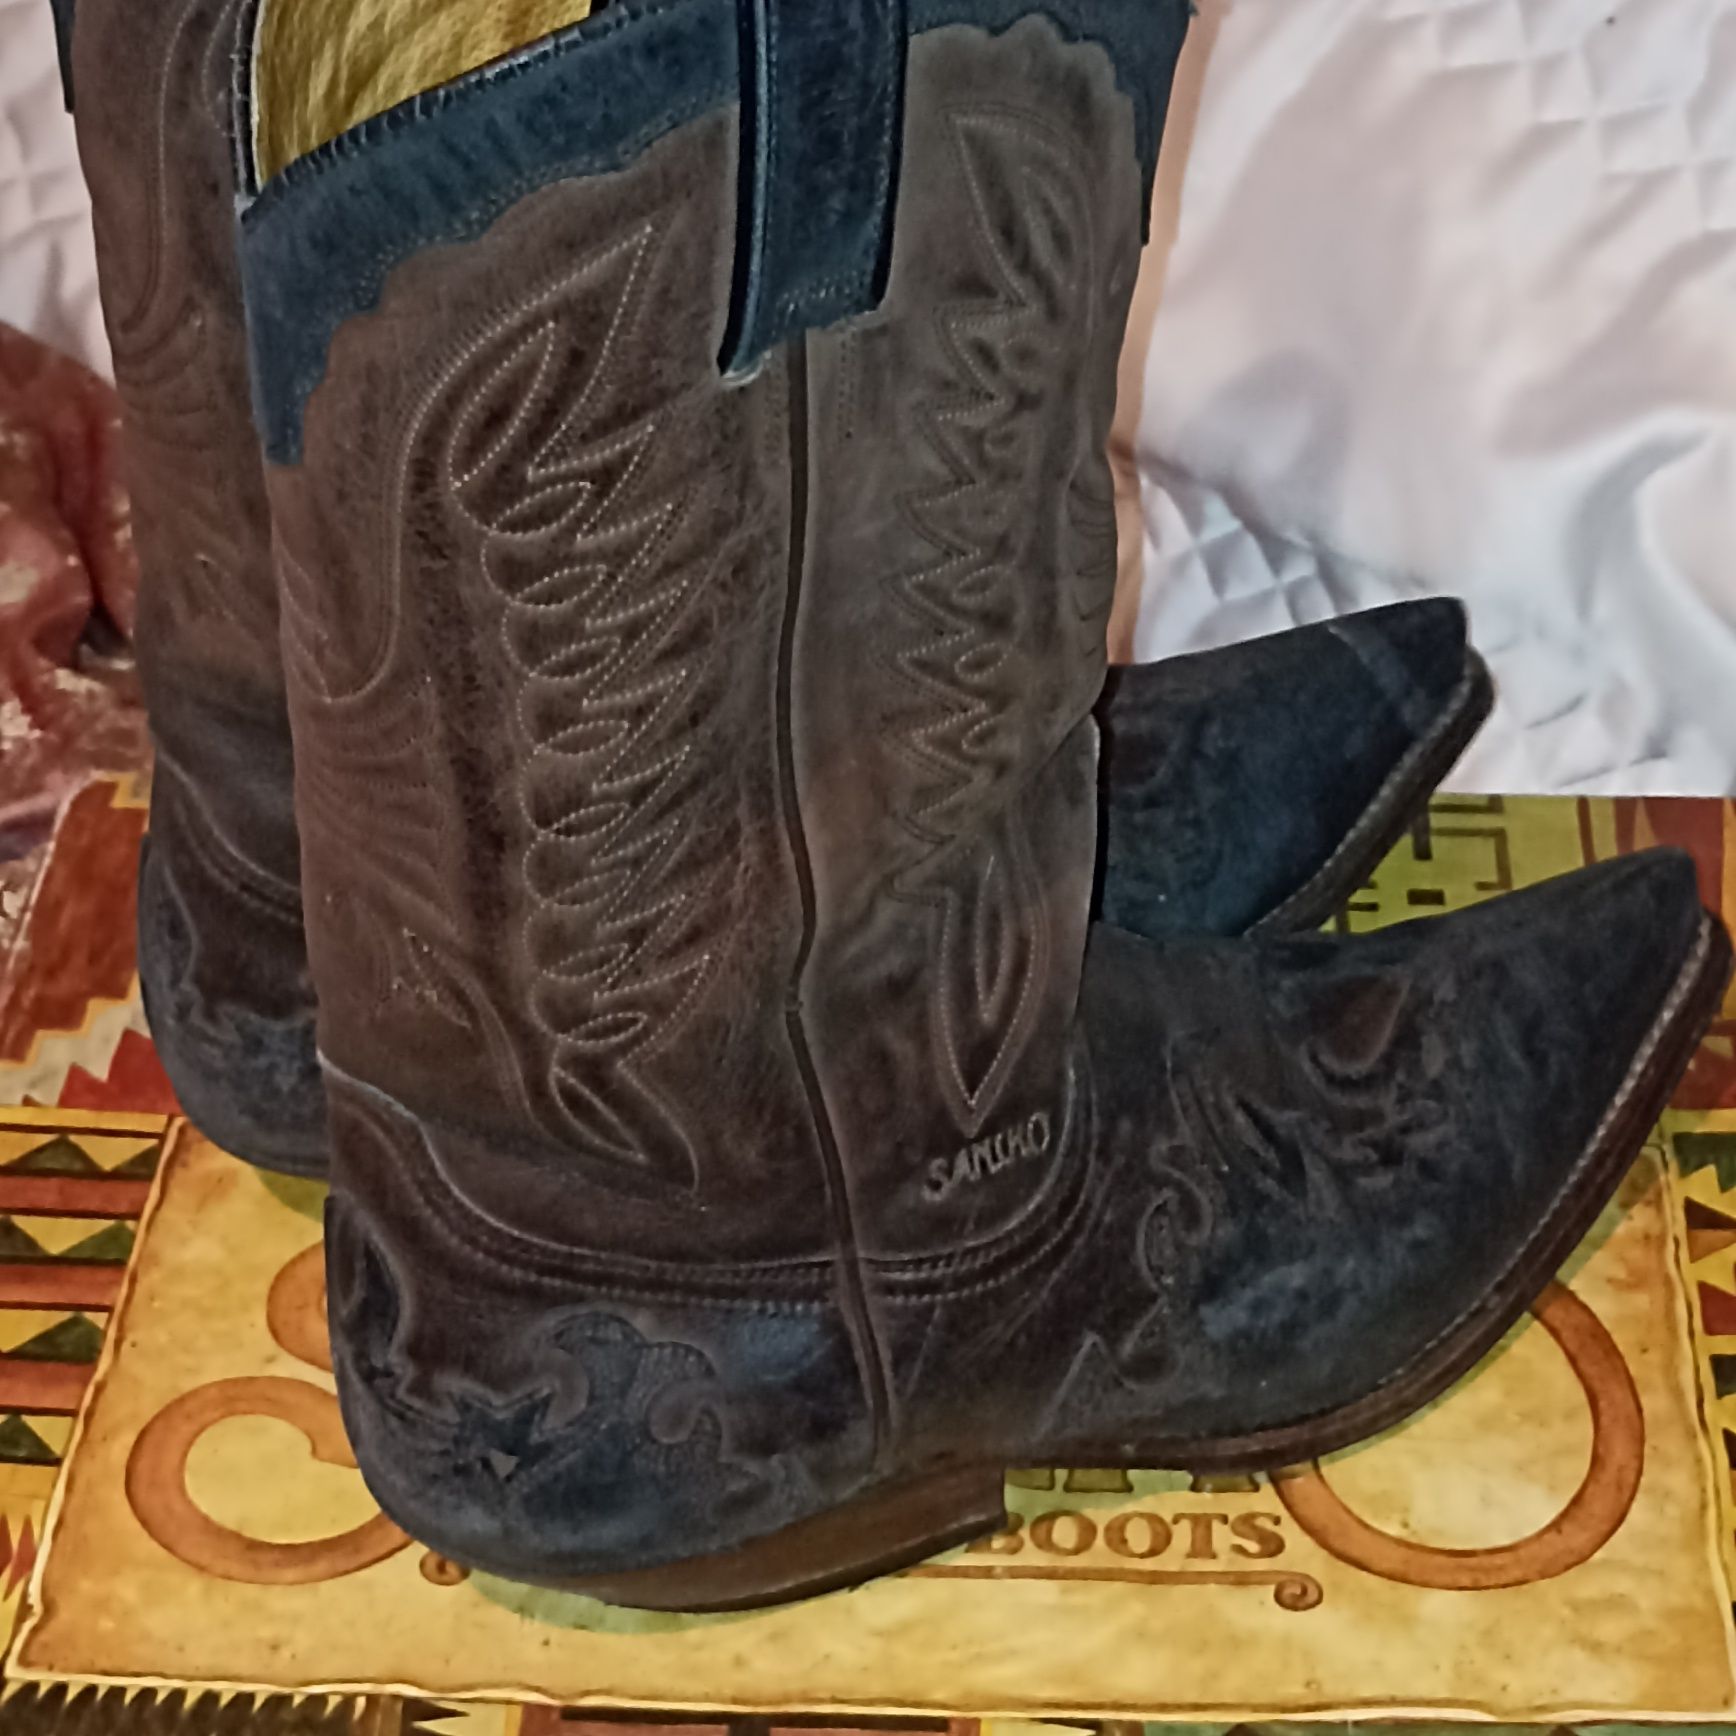 Botas Sancho Western Boots em cabedal tamanho 41